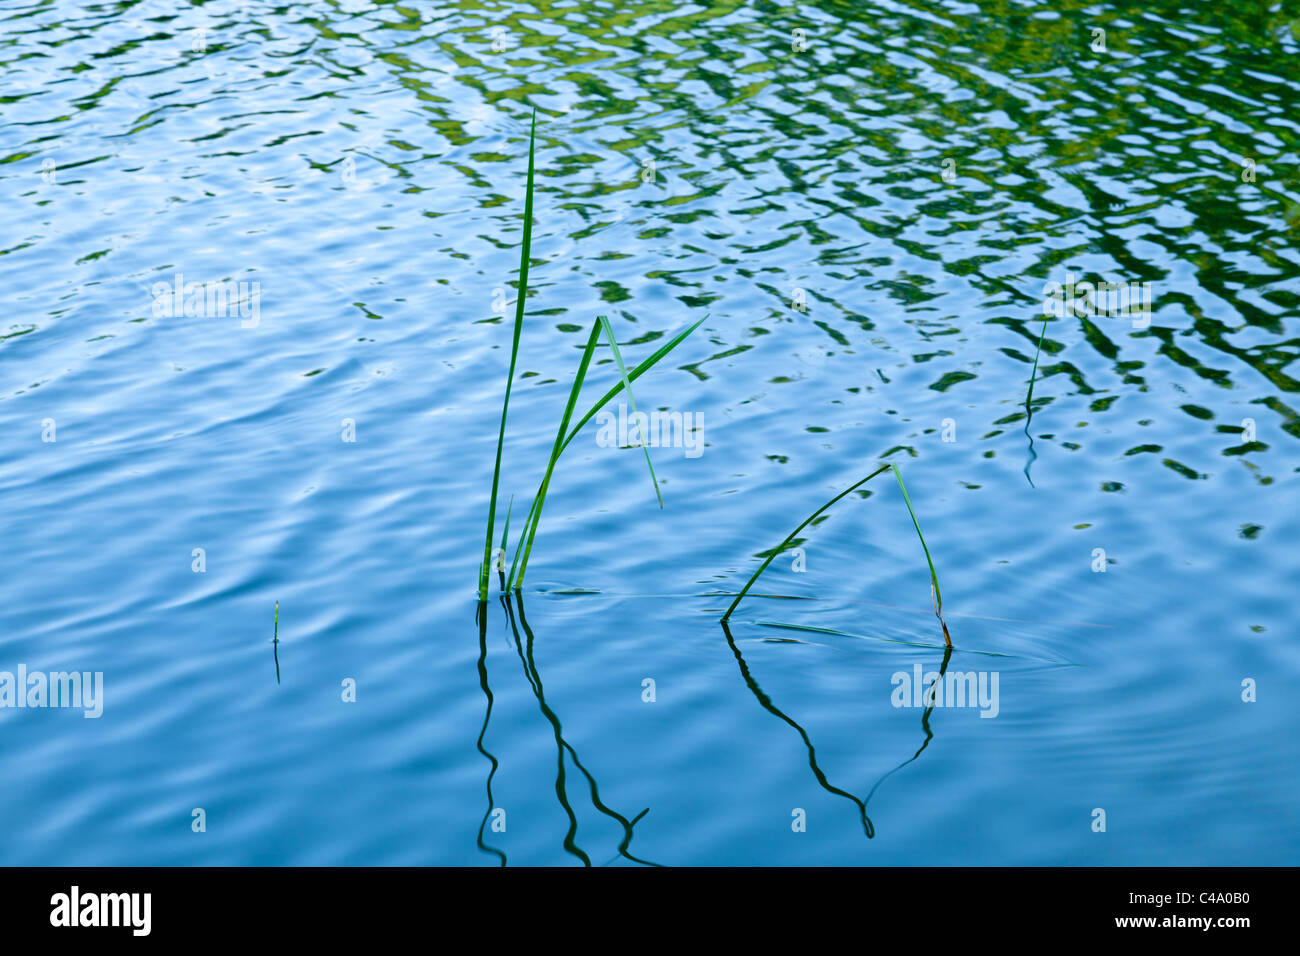 A few reeds sticking up through rippling water, UK Stock Photo